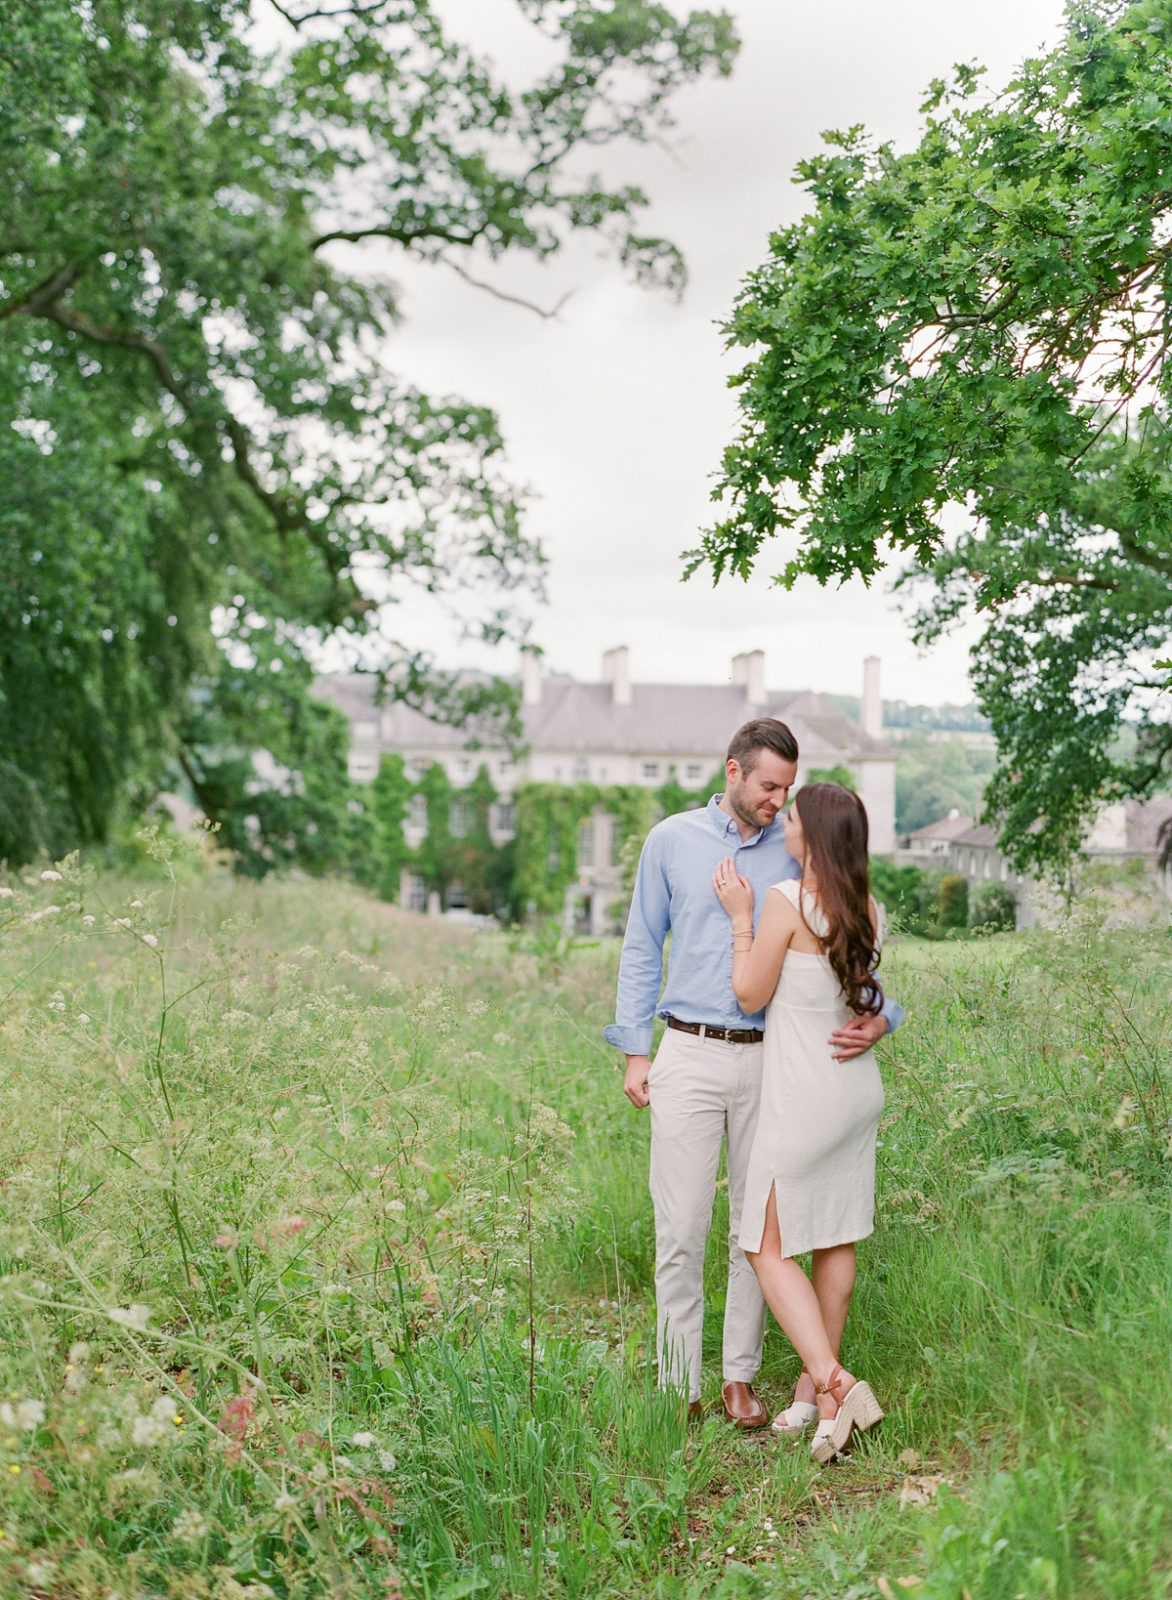 Mount Juliet Estate Wedding Photographer | Ireland Destination Wedding | Molly Carr Photography | Europe Film Photographer | Waterlily Weddings | Pre-Wedding Session | Engagement Photos